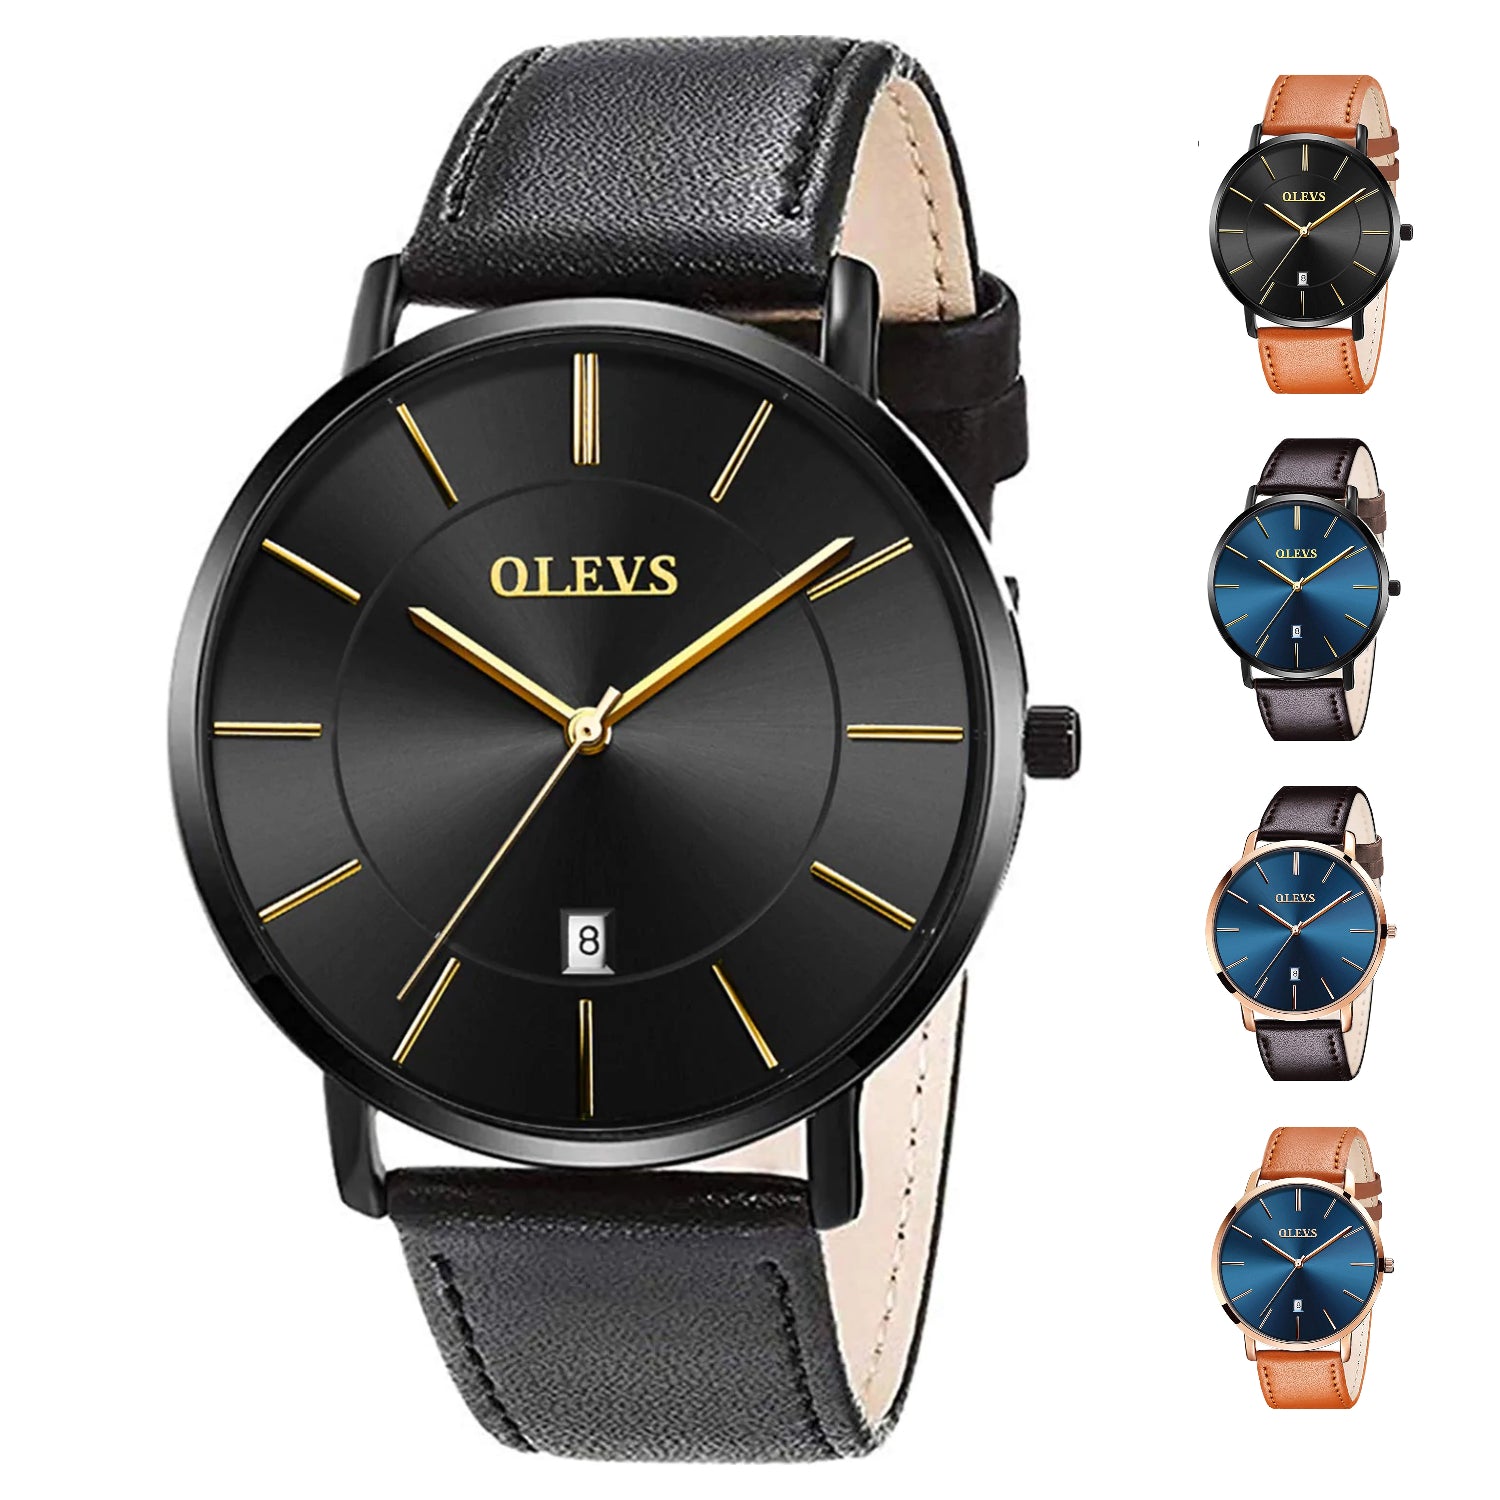 OLVPro™ Men's Ultra Thin Leather Dress Watch - Big Face, Analog, Minimalist, Quartz Wristwatches OLVPro™ Black/Black 